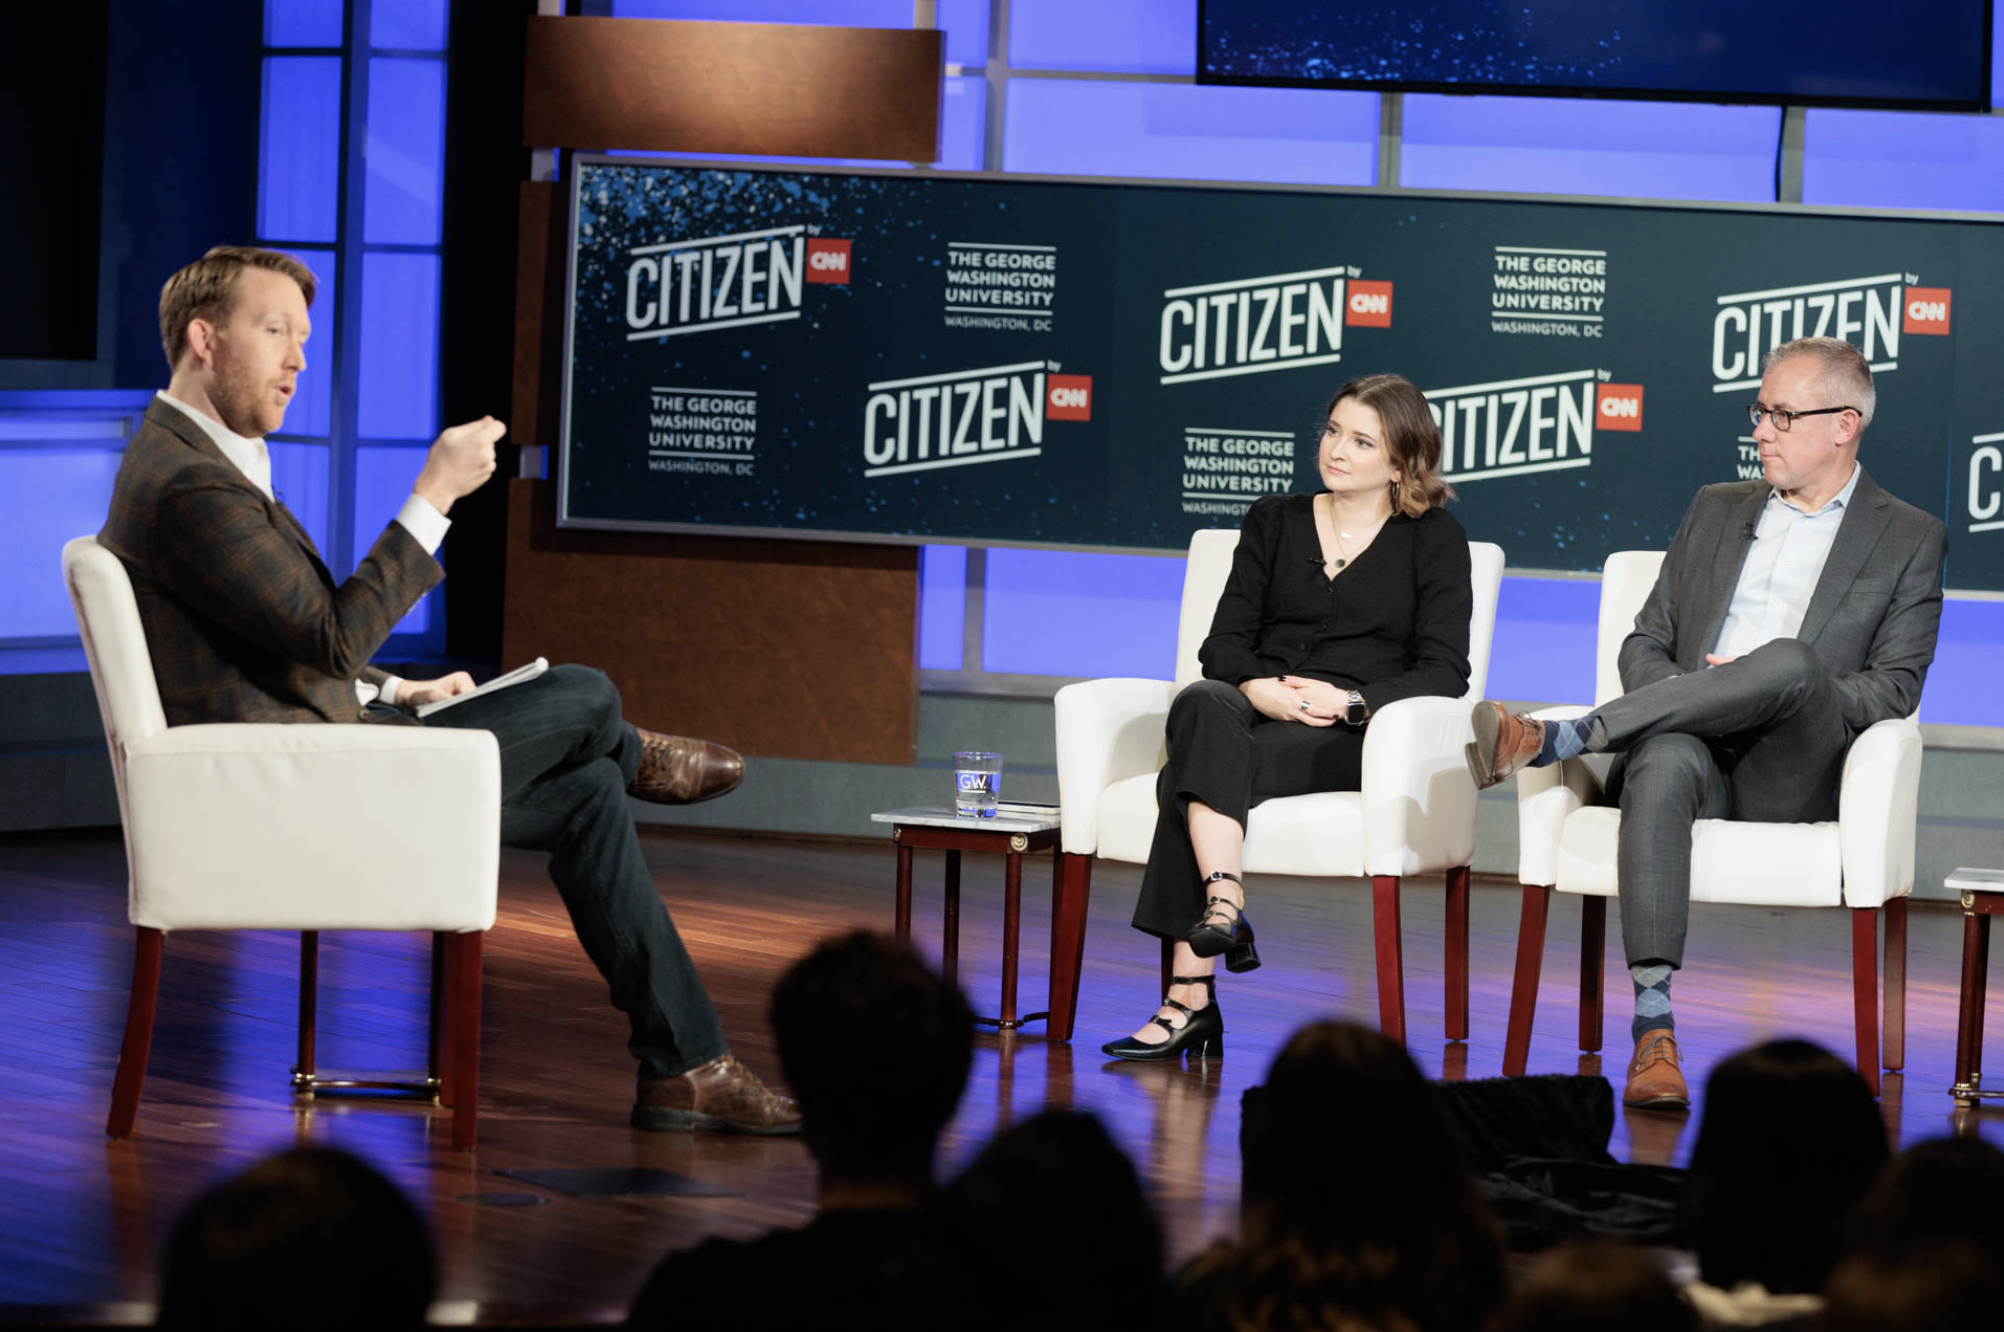 Citizen by CNN panelists